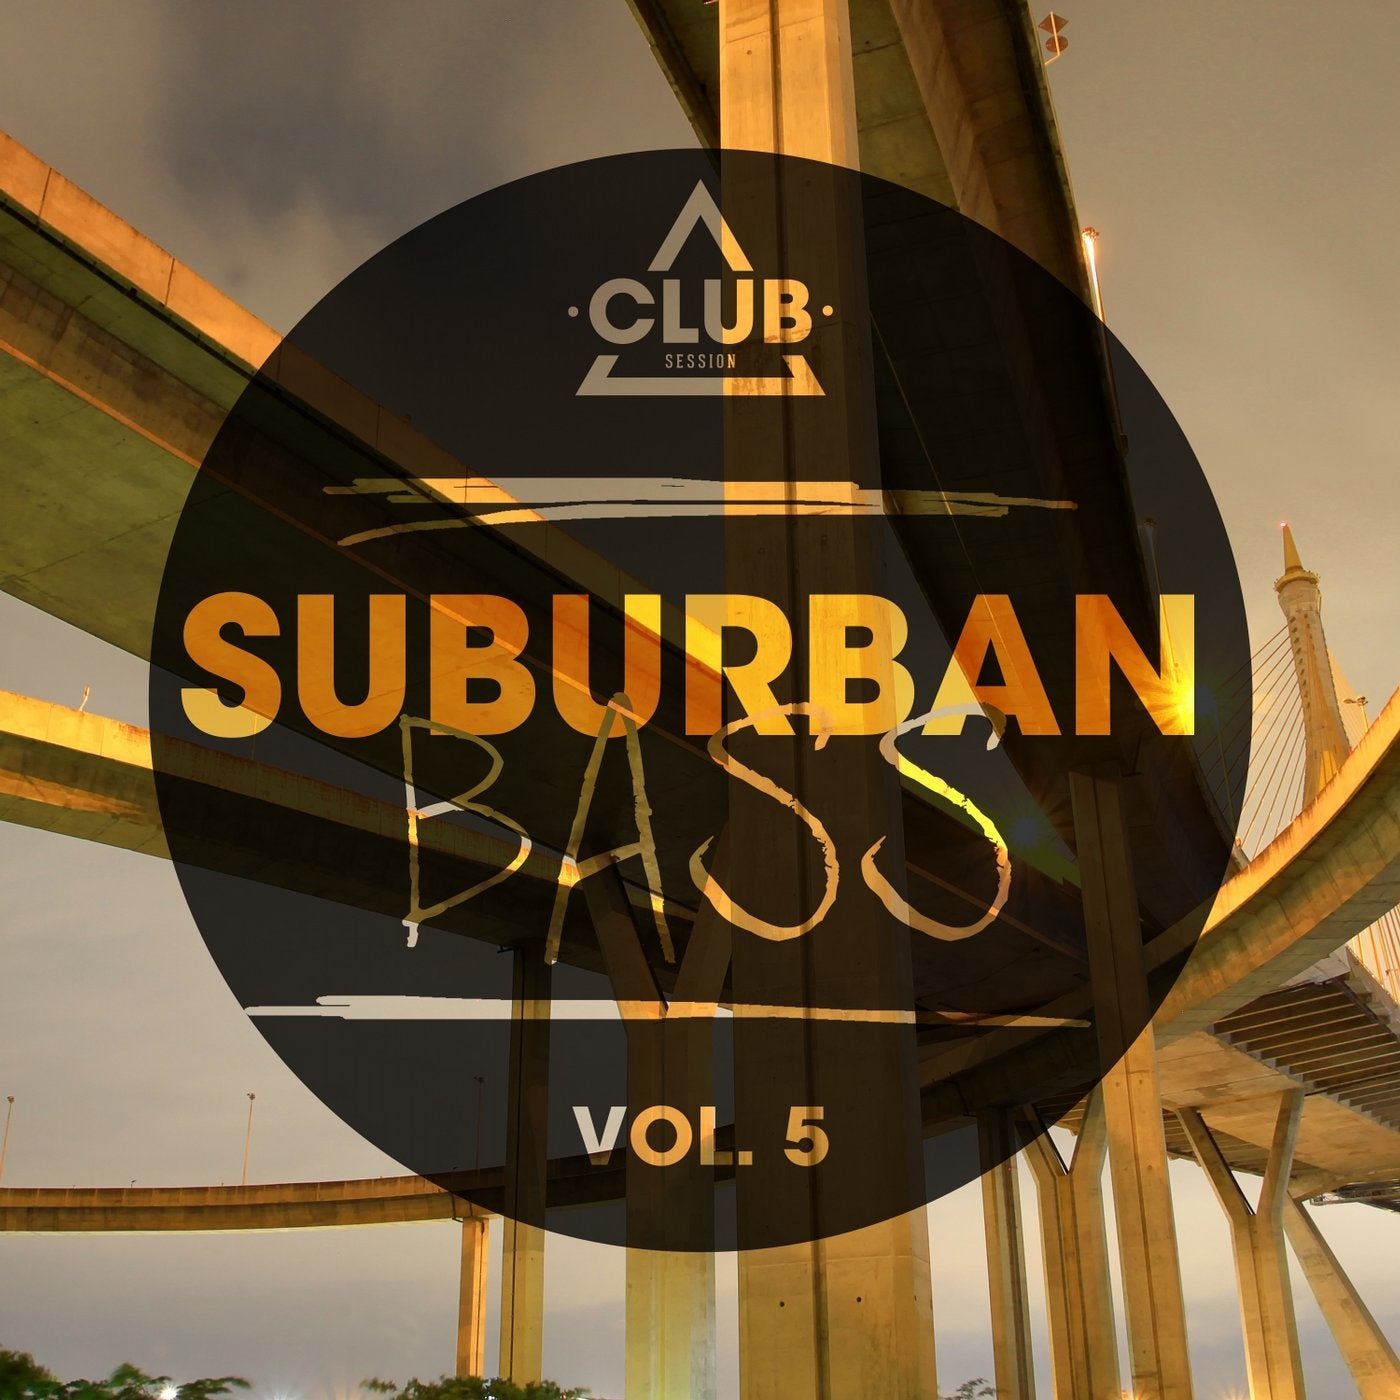 Suburban Bass Vol. 5